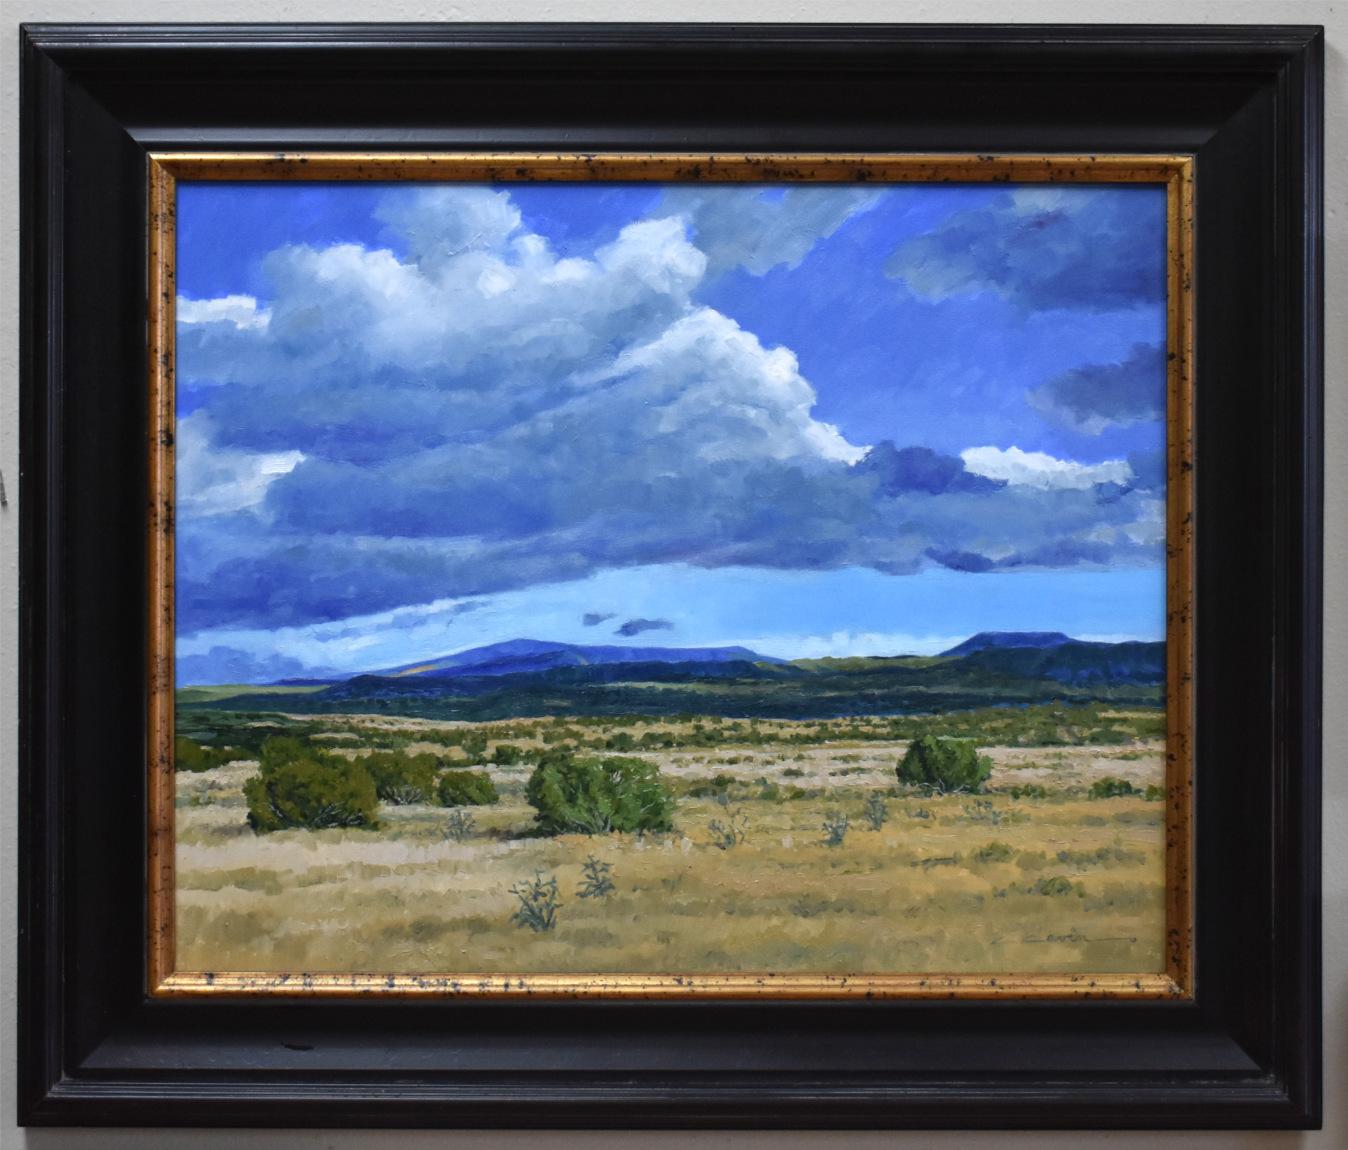 CLIFF CAVIN Landscape Painting - "BIG SKY" WEST TEXAS